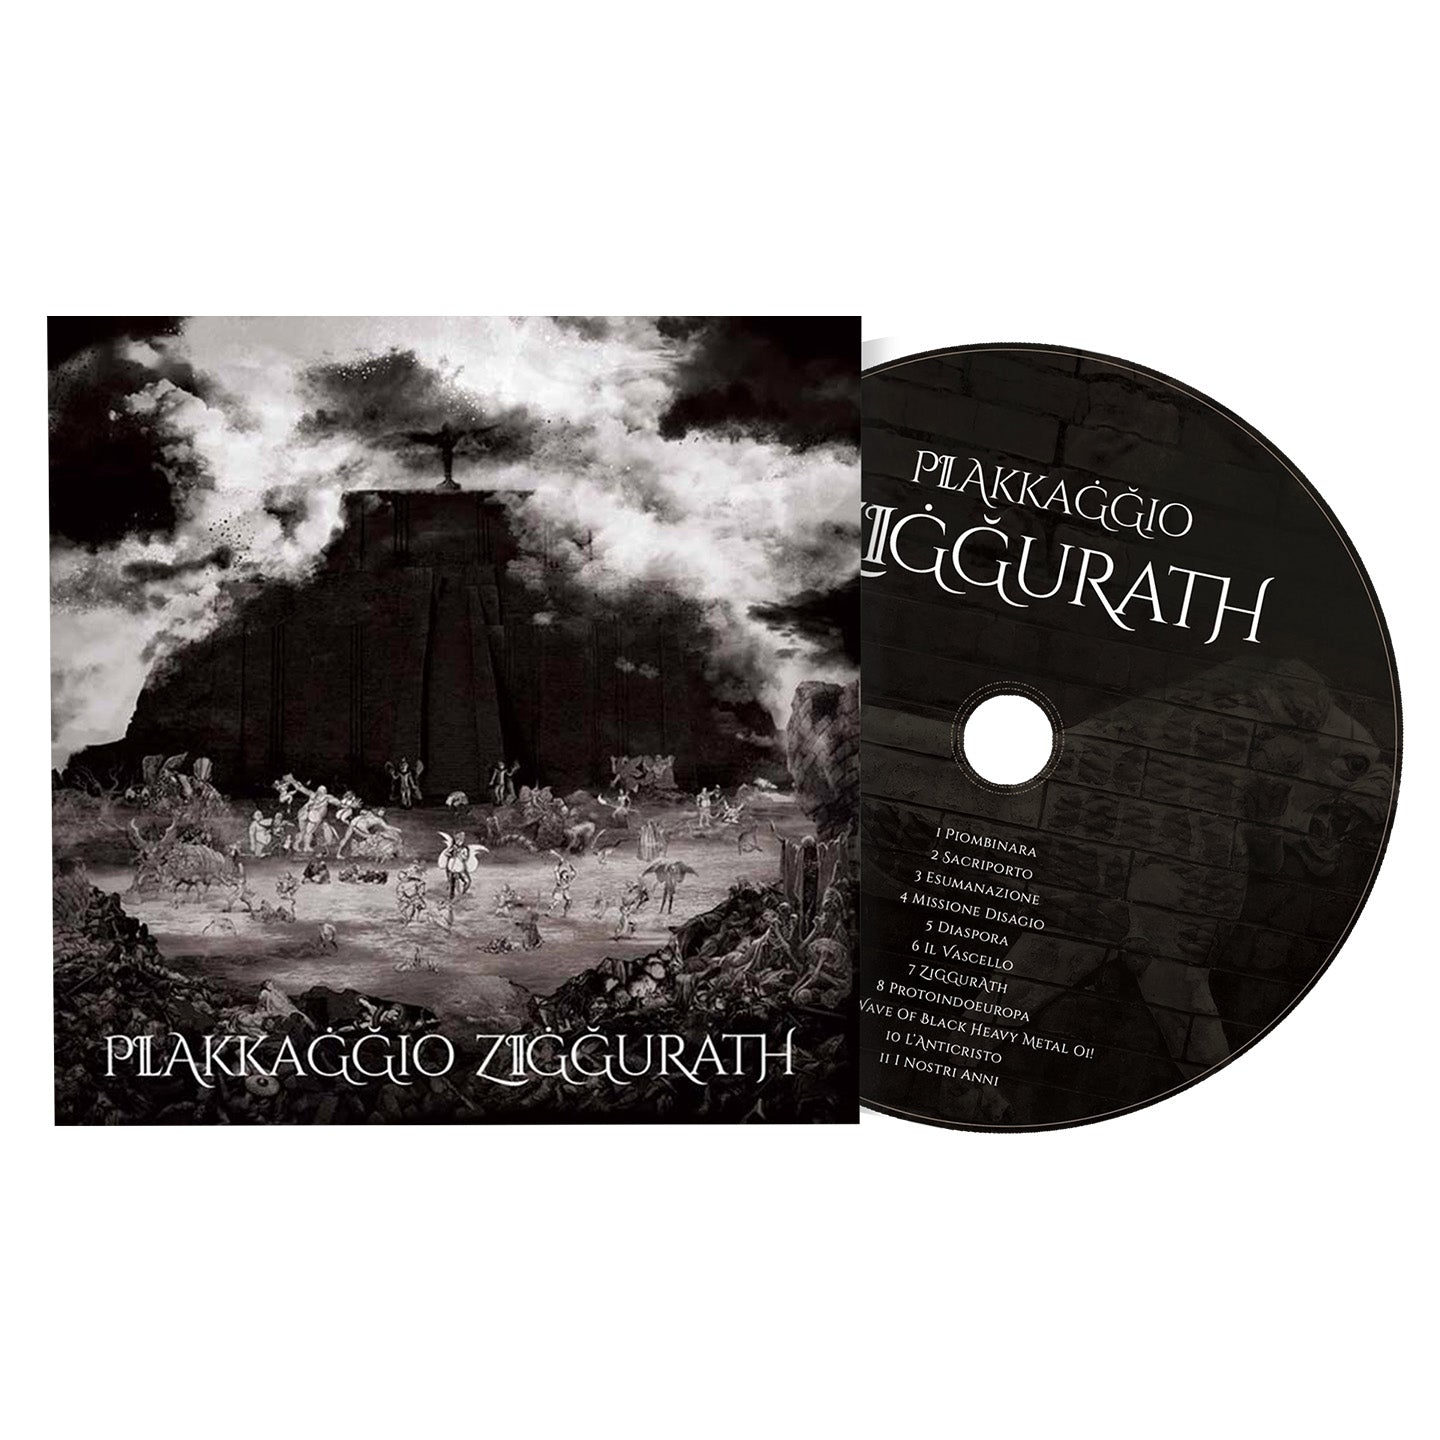 Plakkaggio "Ziggurath" cd jewel case